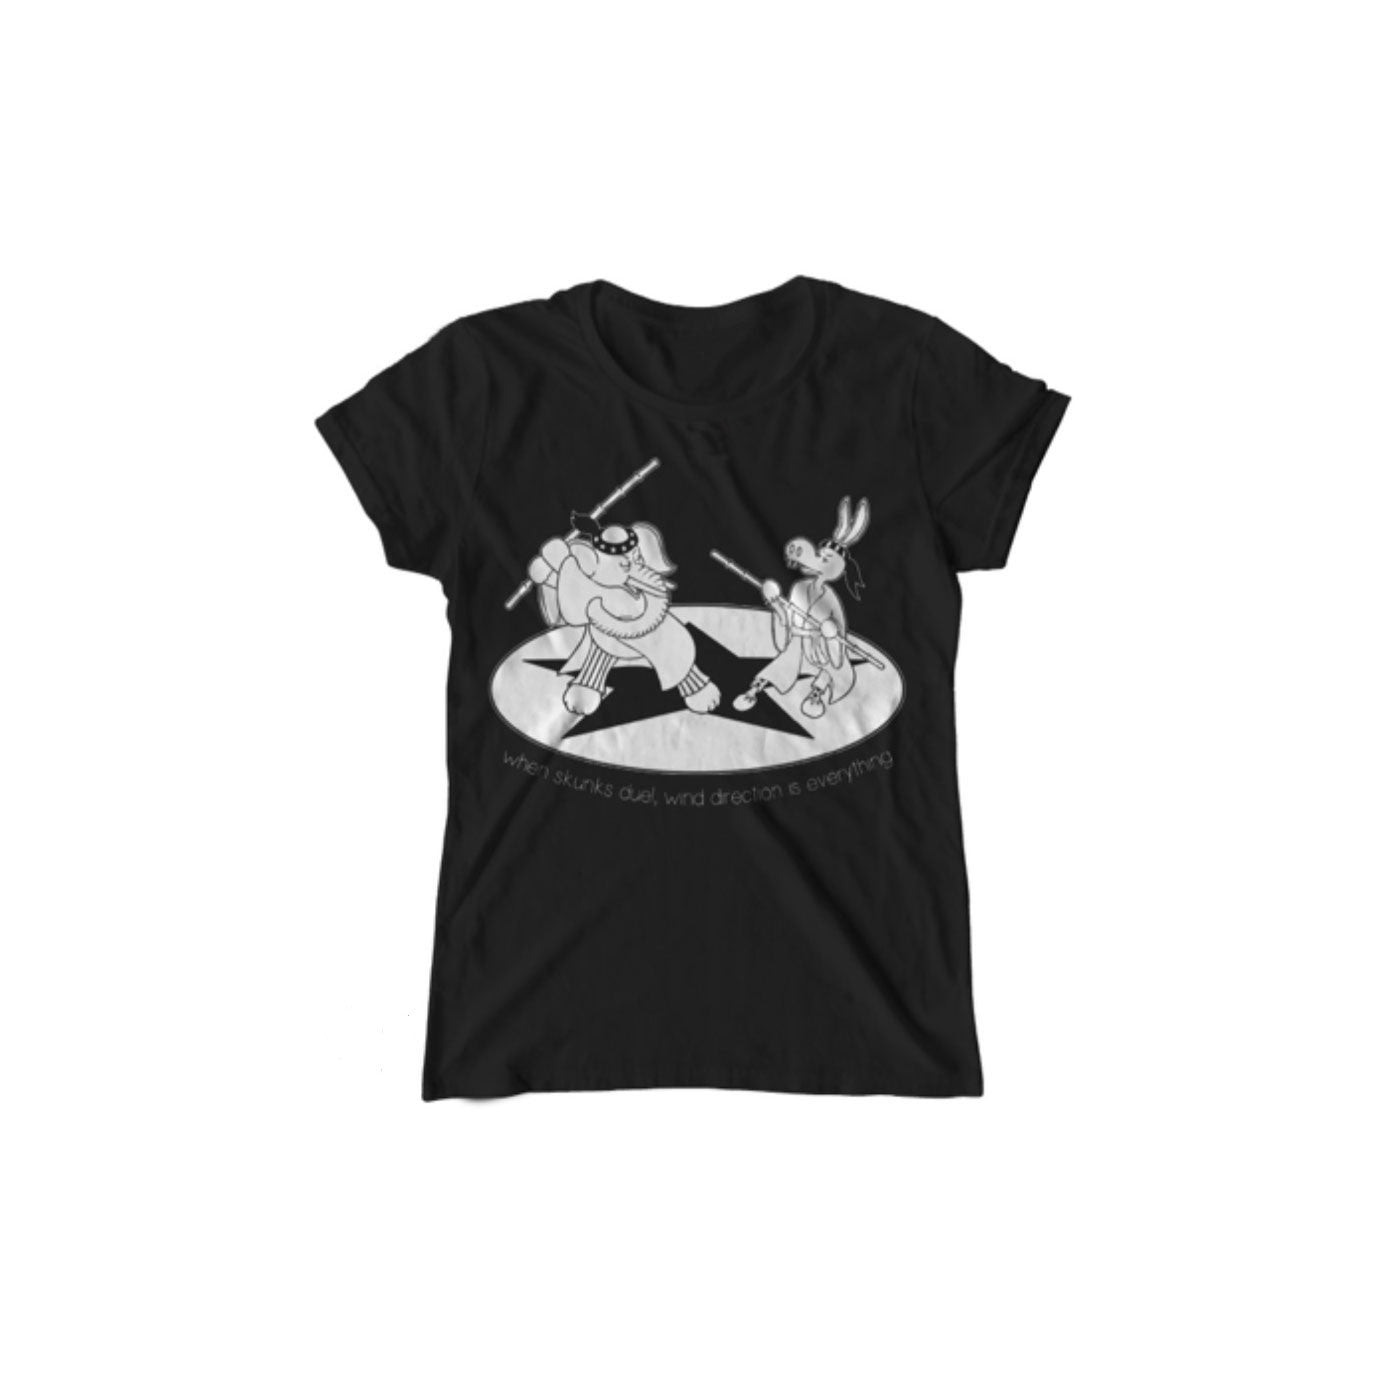 Skunks Dueling ( Democrat or Republican ) T-shirt